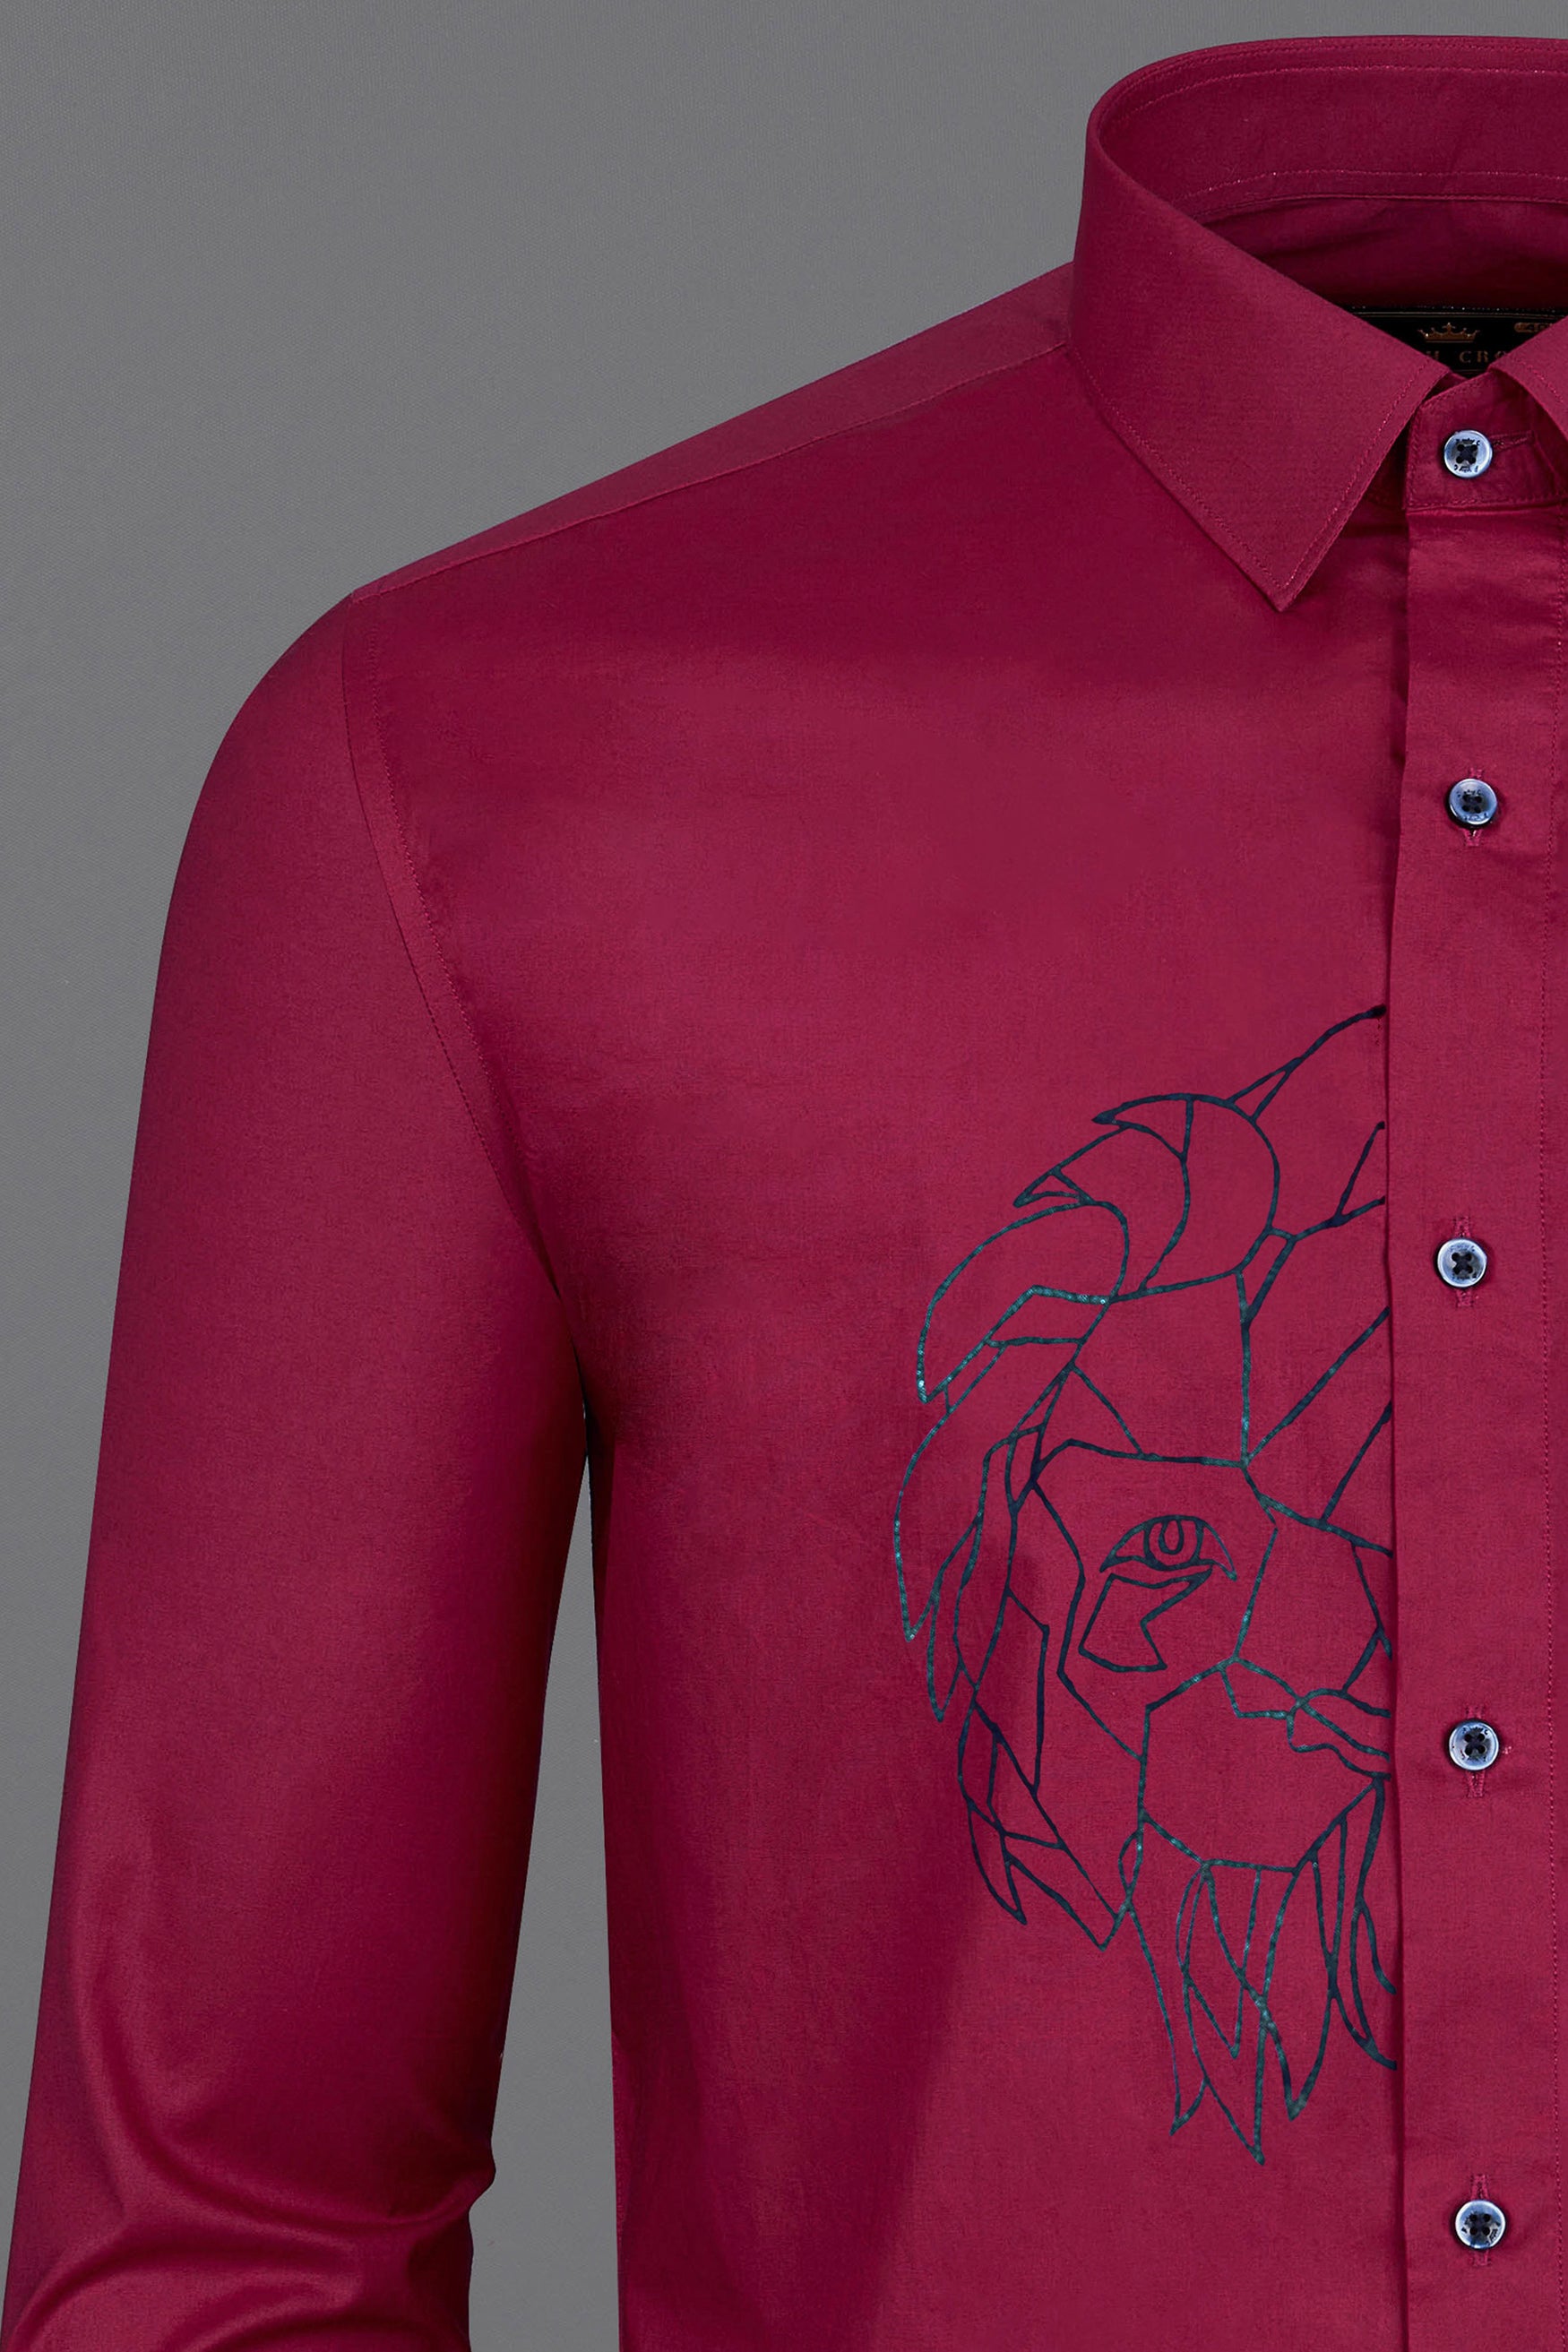 Merlot Red with Lion Hand Painted Super Soft Premium Cotton Shirt